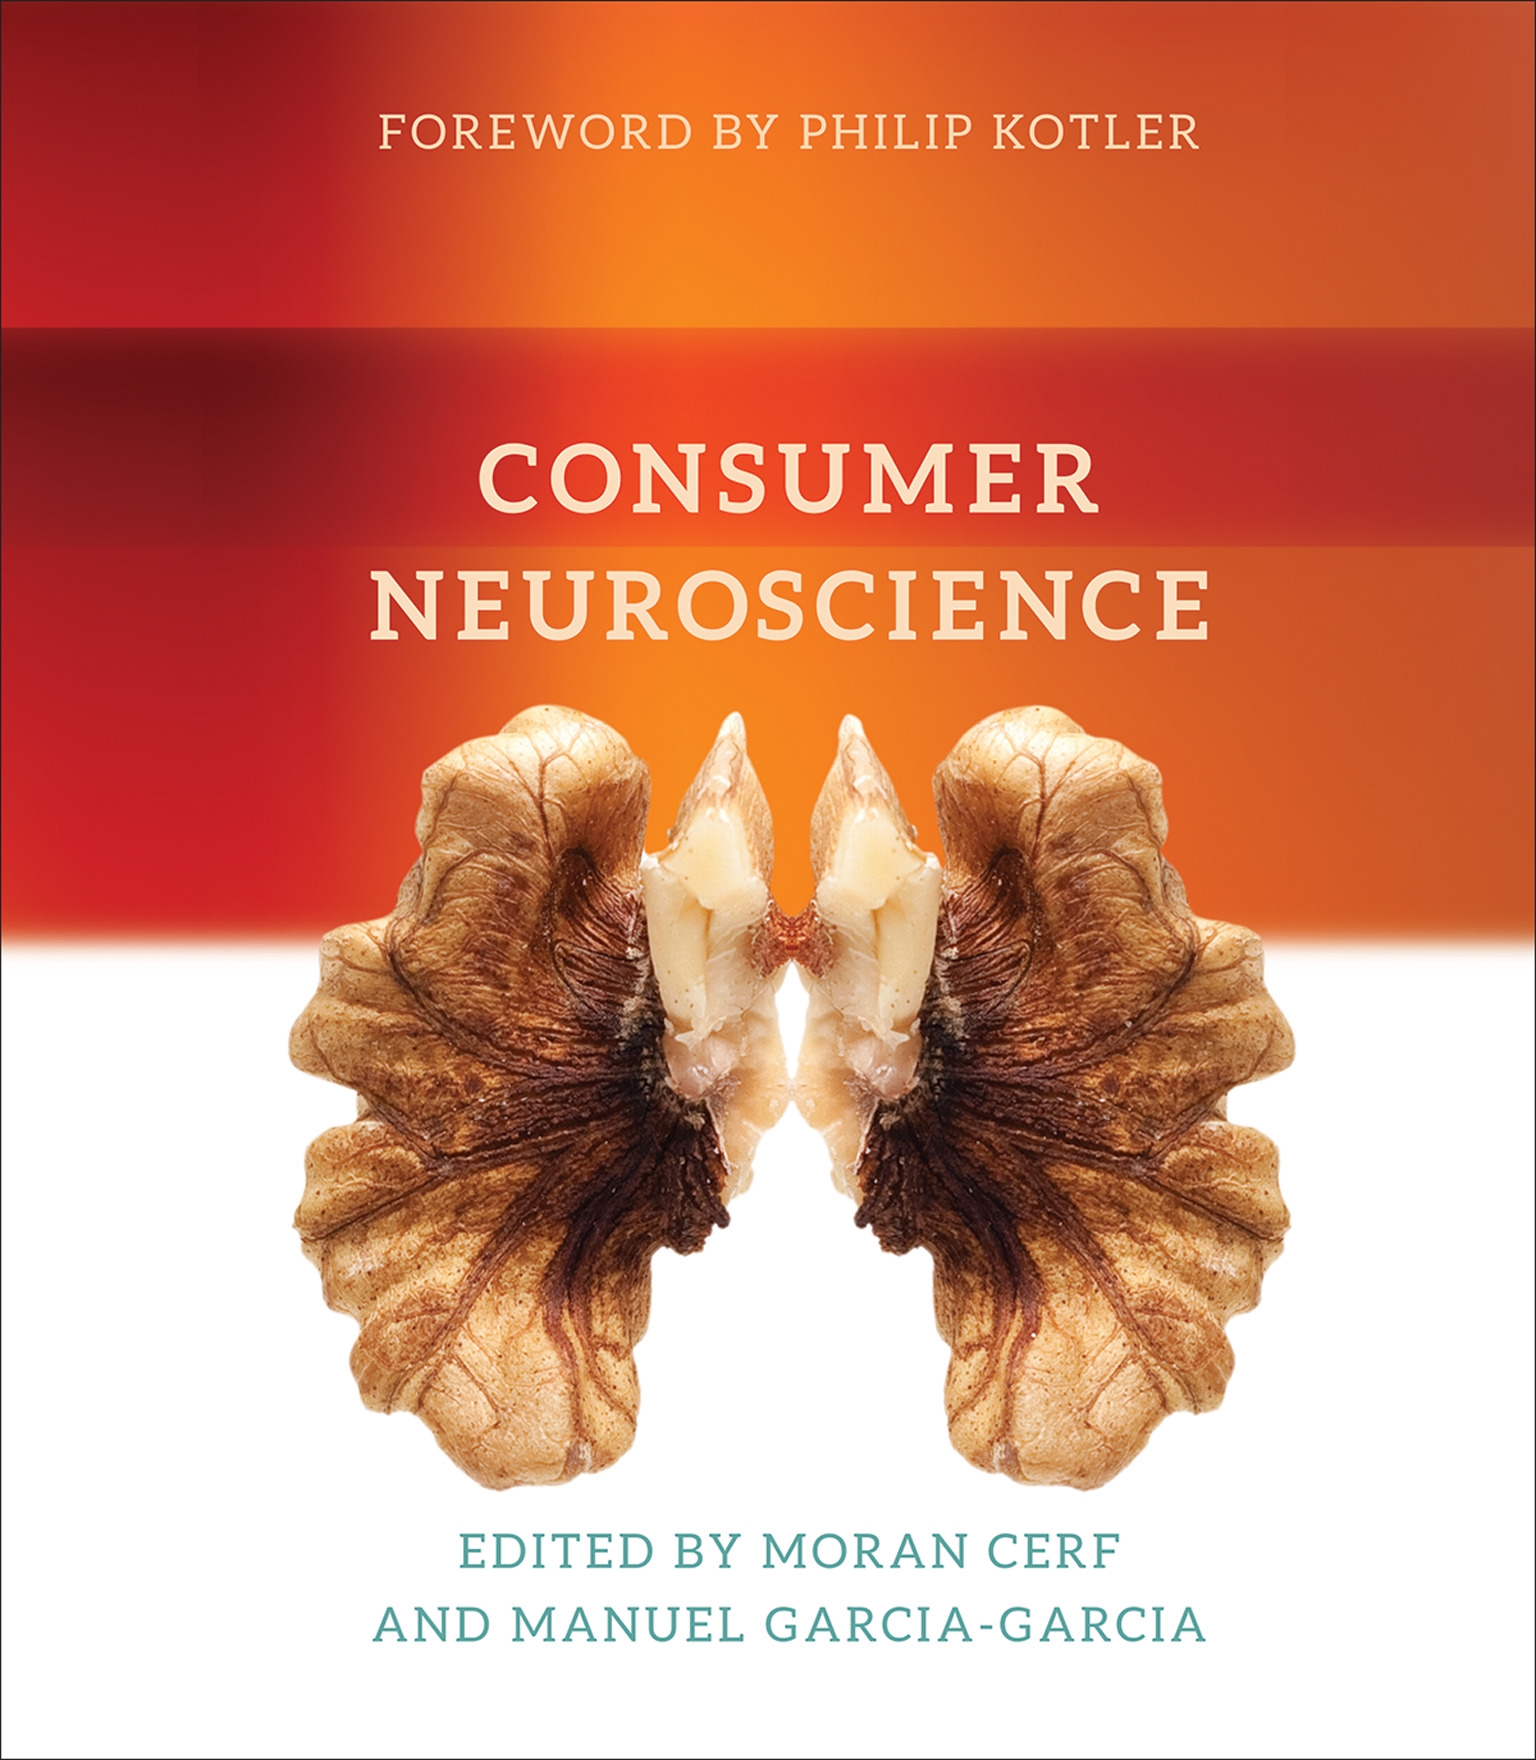 research topics on consumer neuroscience